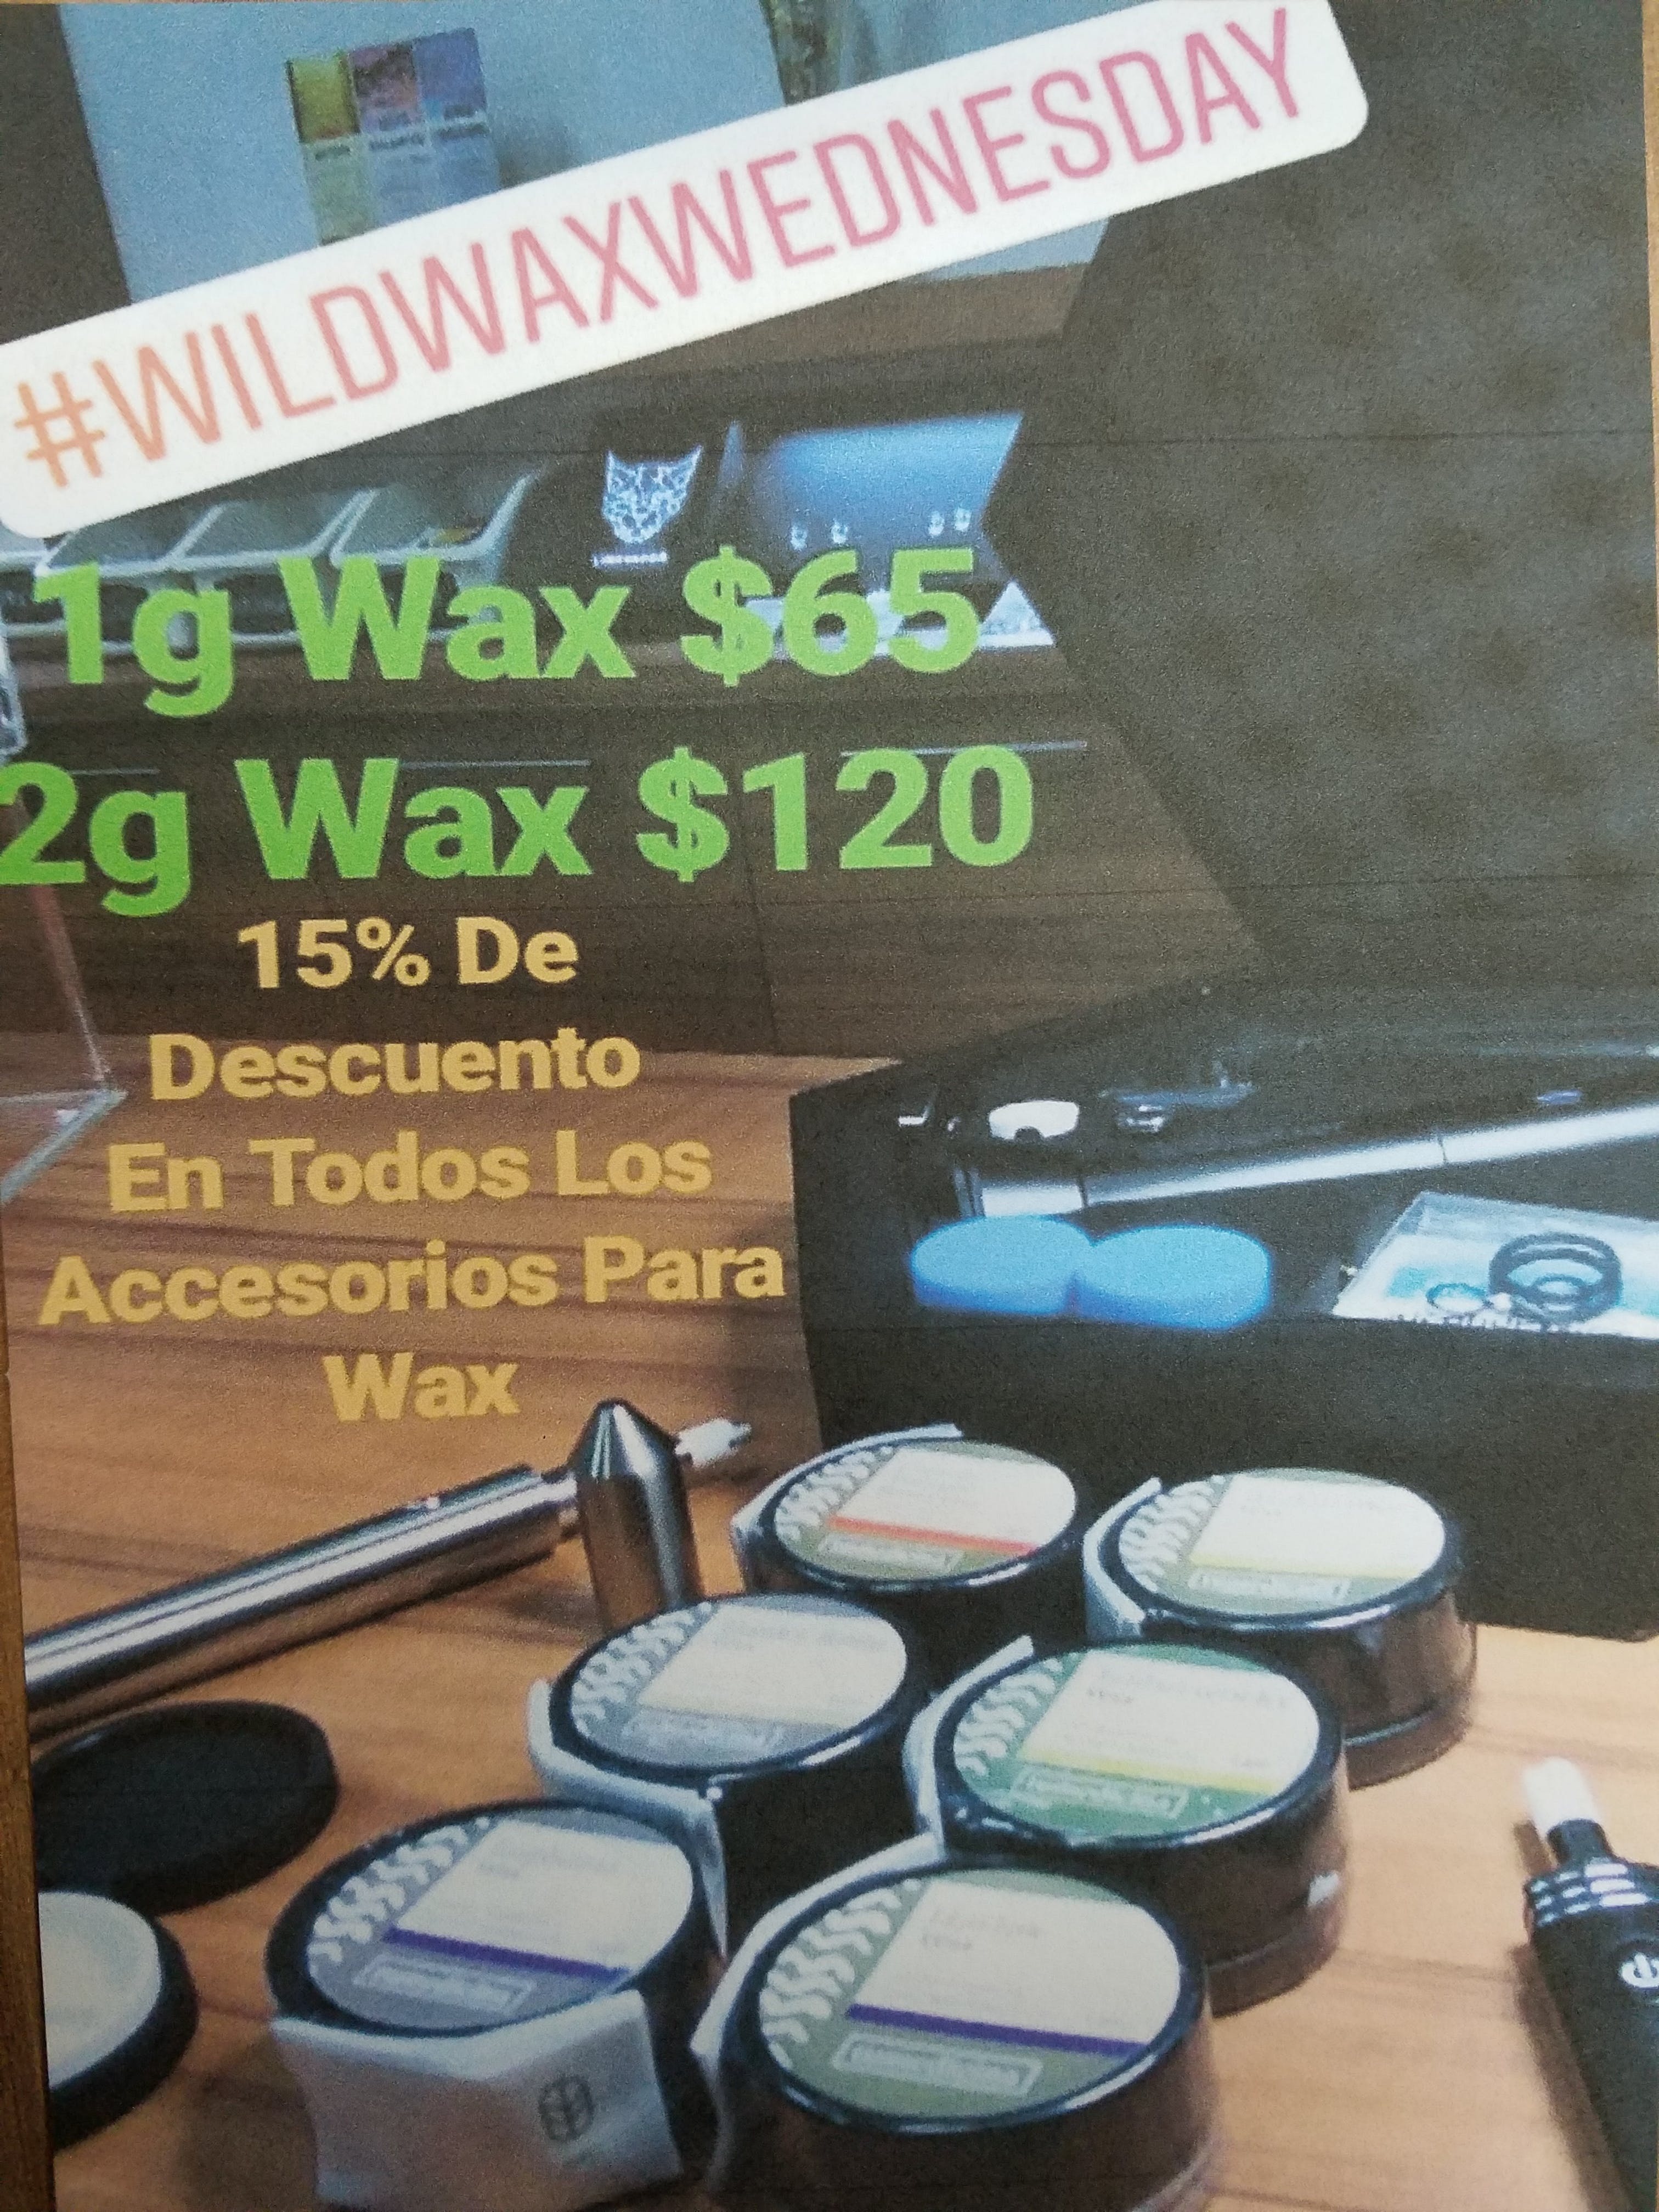 wax-wild-wax-wednesday-21-21-21